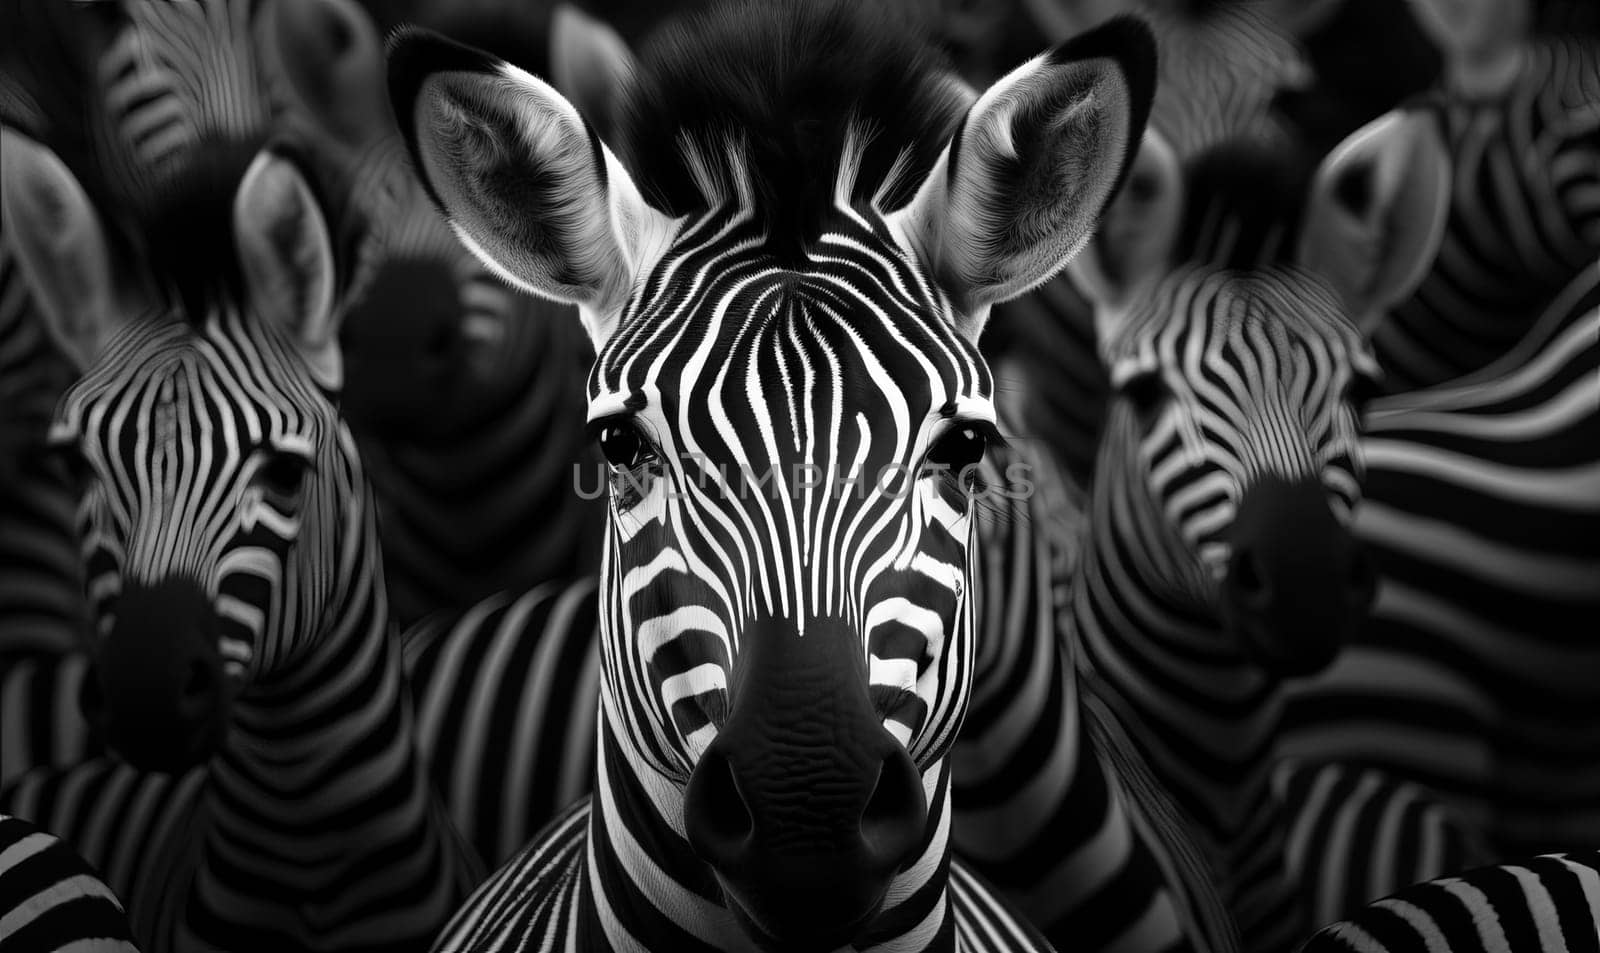 Creative background with zebras full frame. by Fischeron